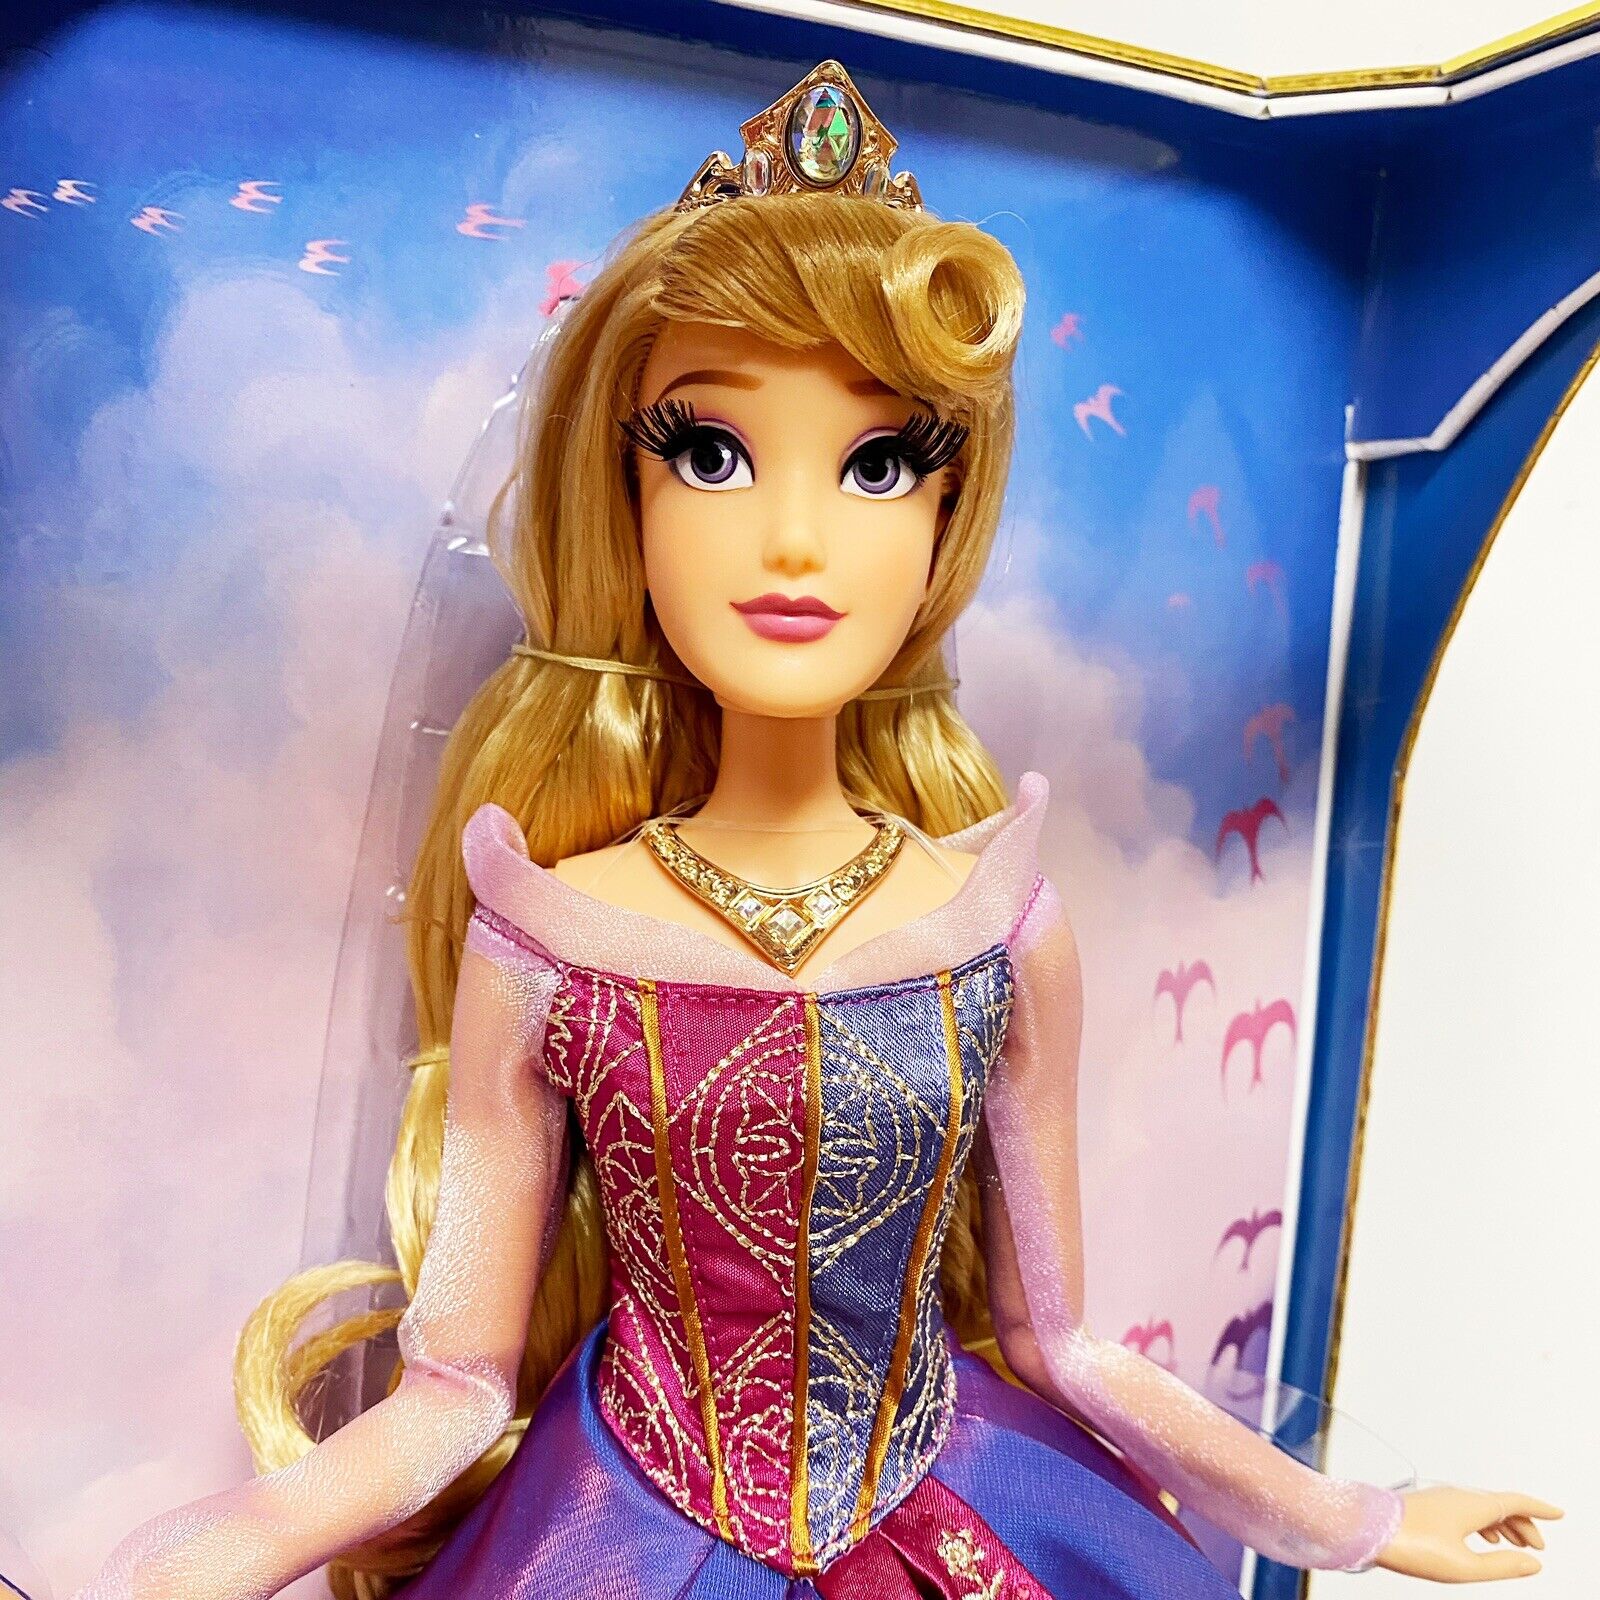 Disney Store Limited Edition 65th Anniversary Aurora Doll, Sleeping Beauty